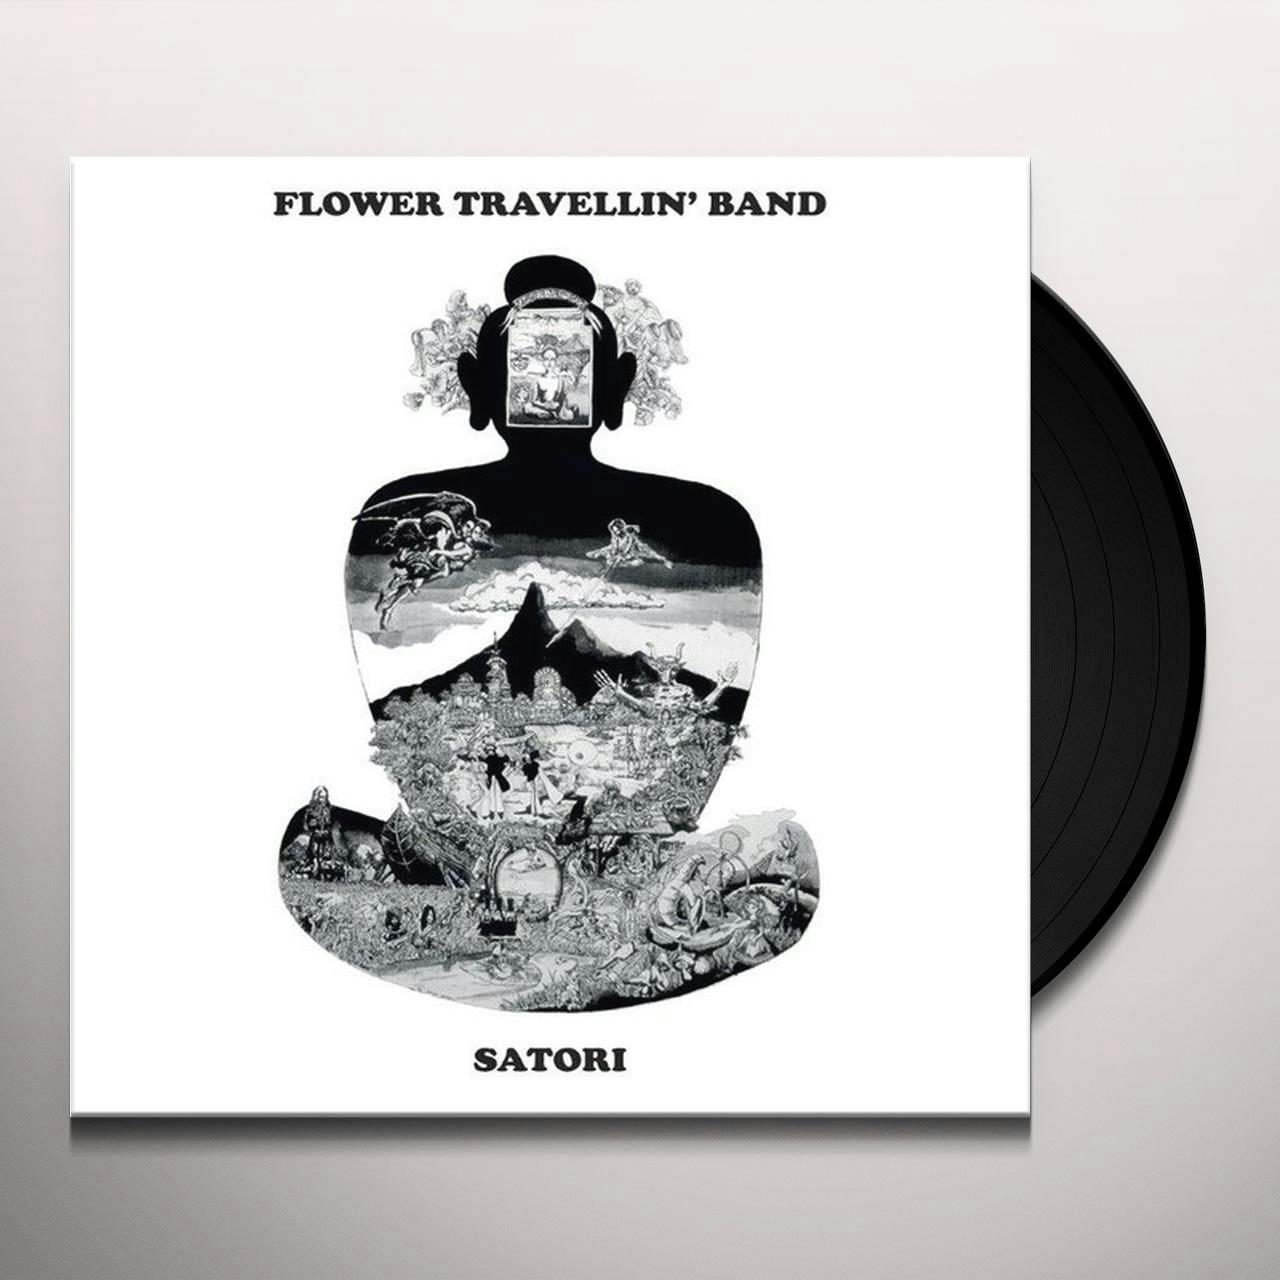 Satori (White/Limited) Vinyl Record - Flower Travellin' Band